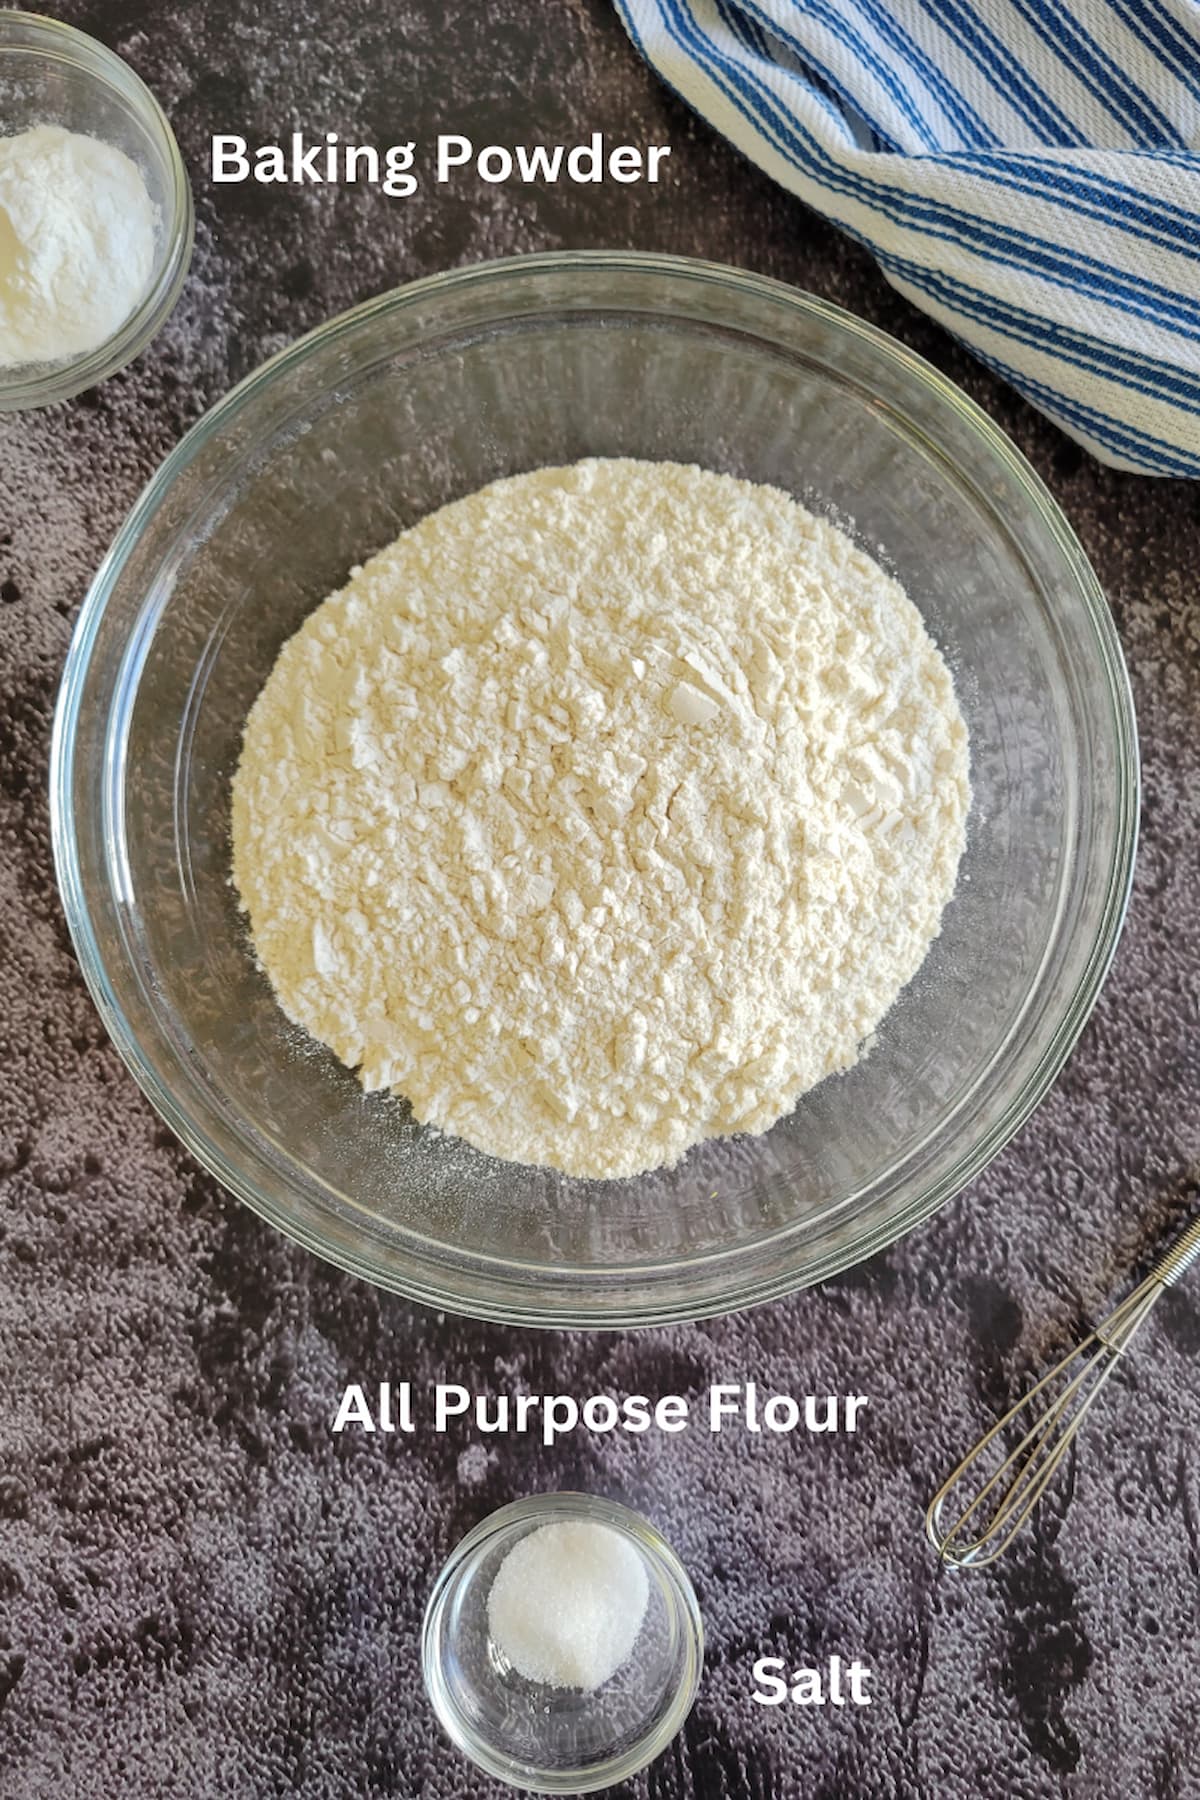 ingredients for recipe for self rising flour - all purpose flour, salt, baking powder